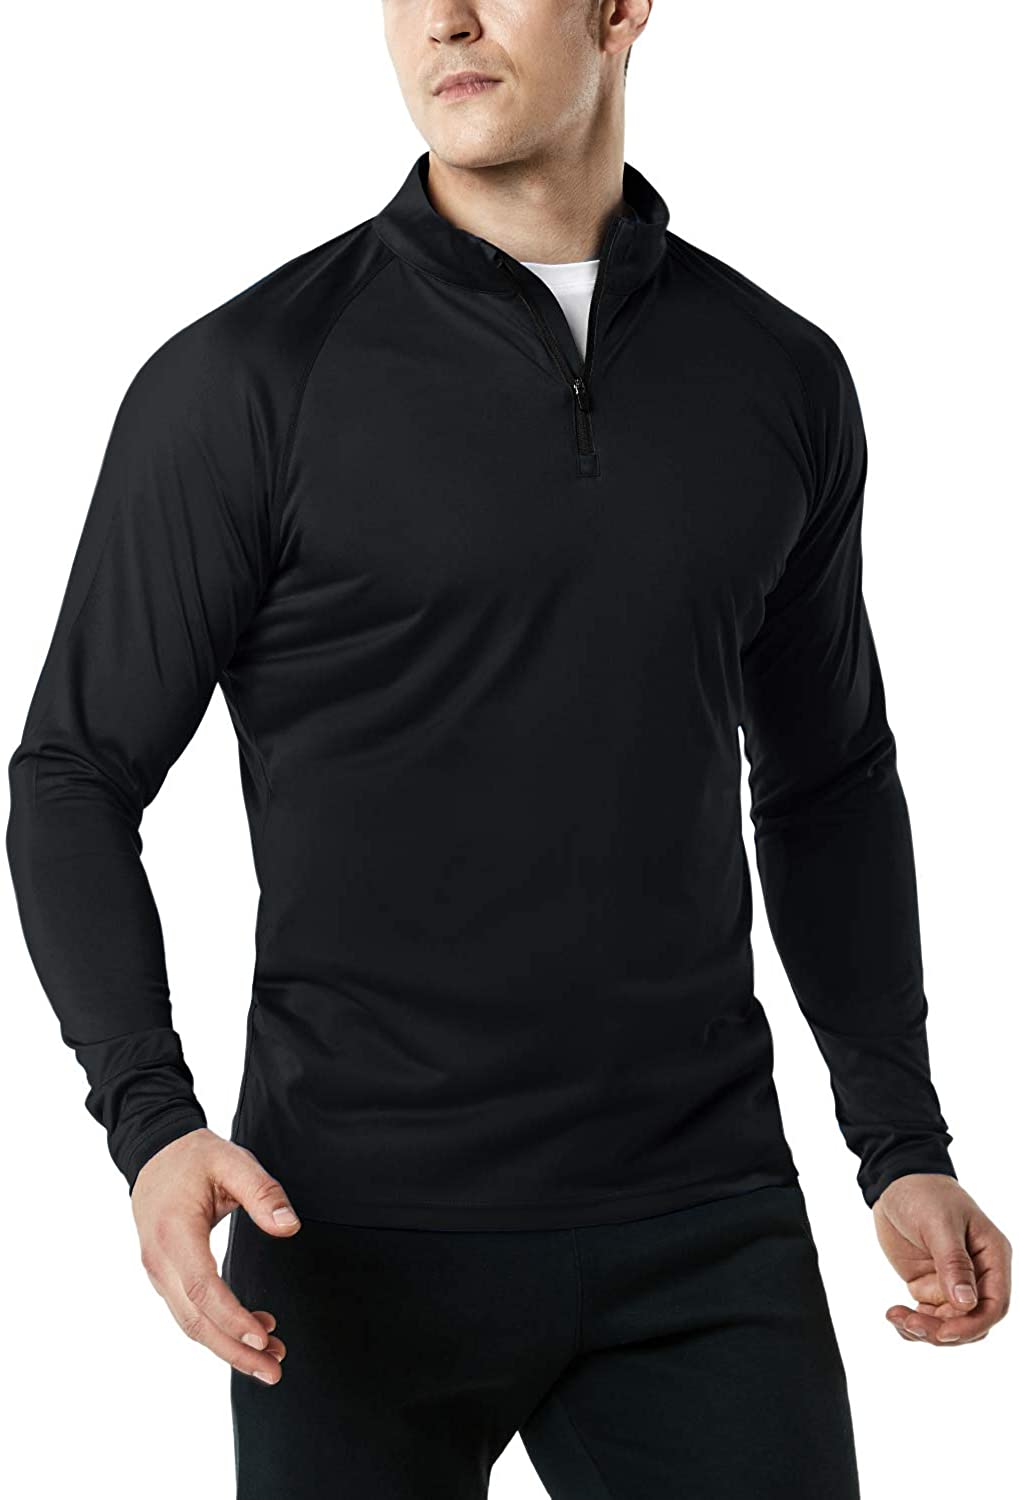 TSLA Mens 1/4 Zip Cool Dry Active Sporty Shirt 